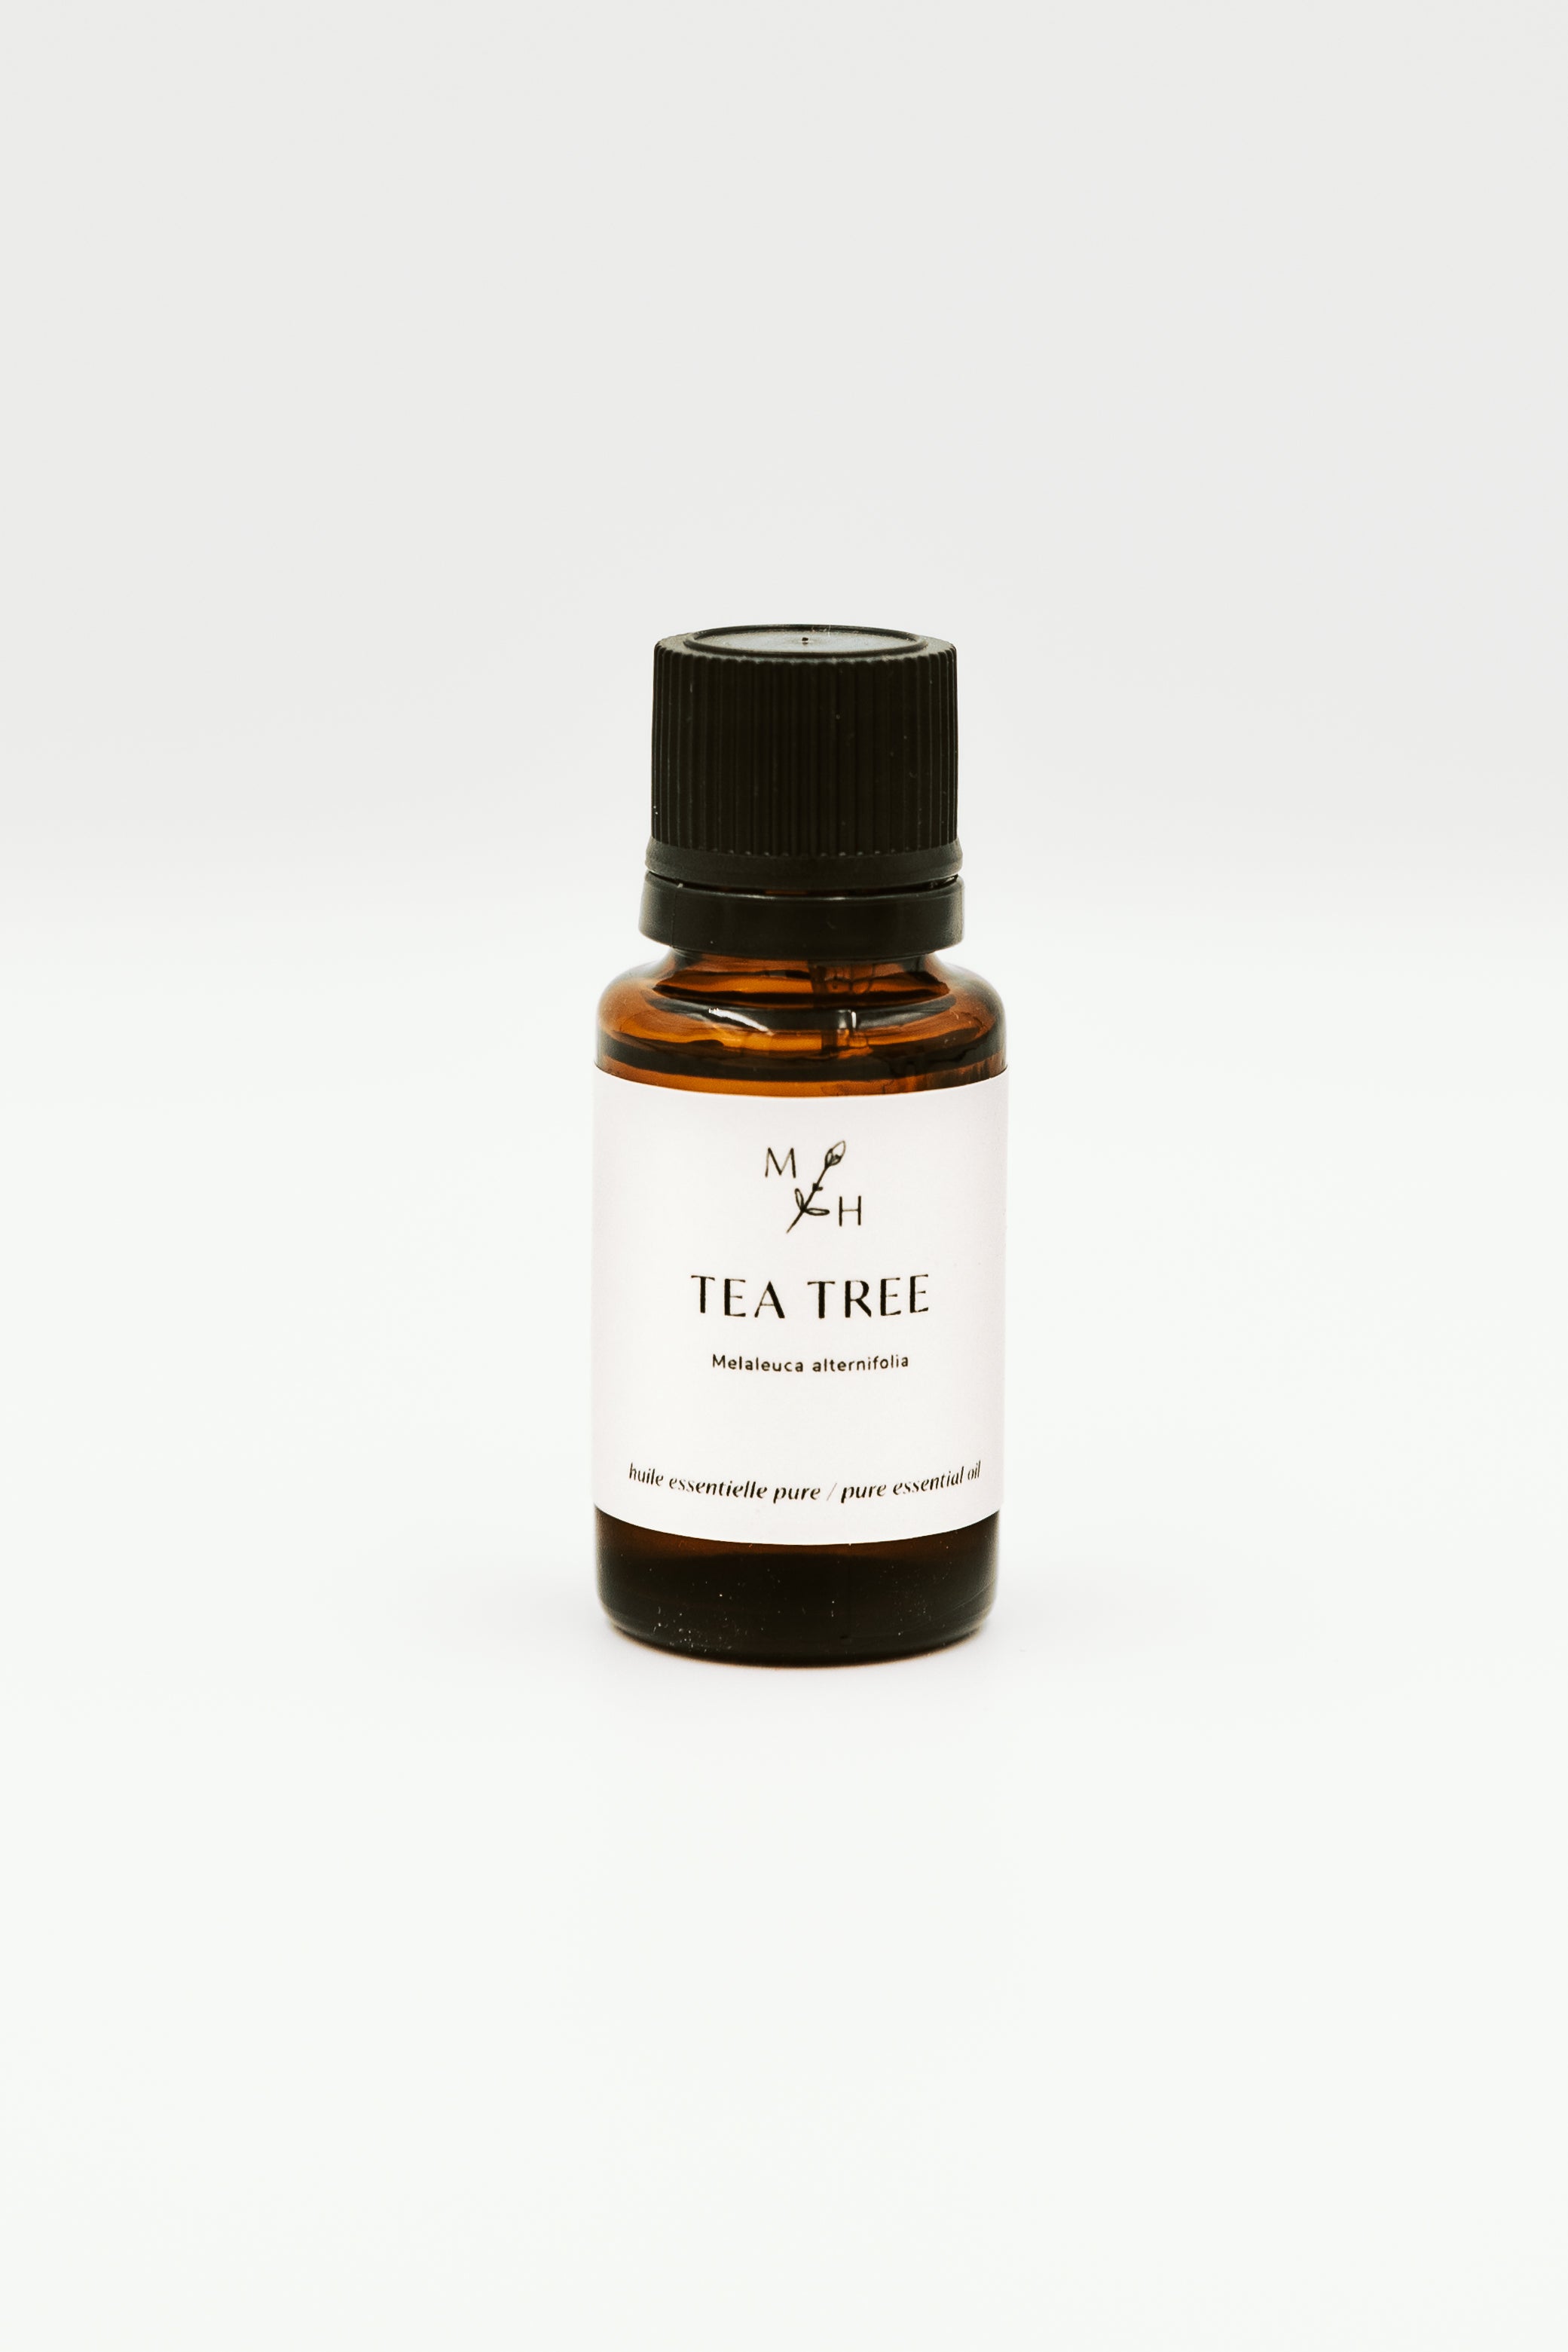 Tea Tree - Hydrolat - Herbes & Traditions - Aromathérapie 